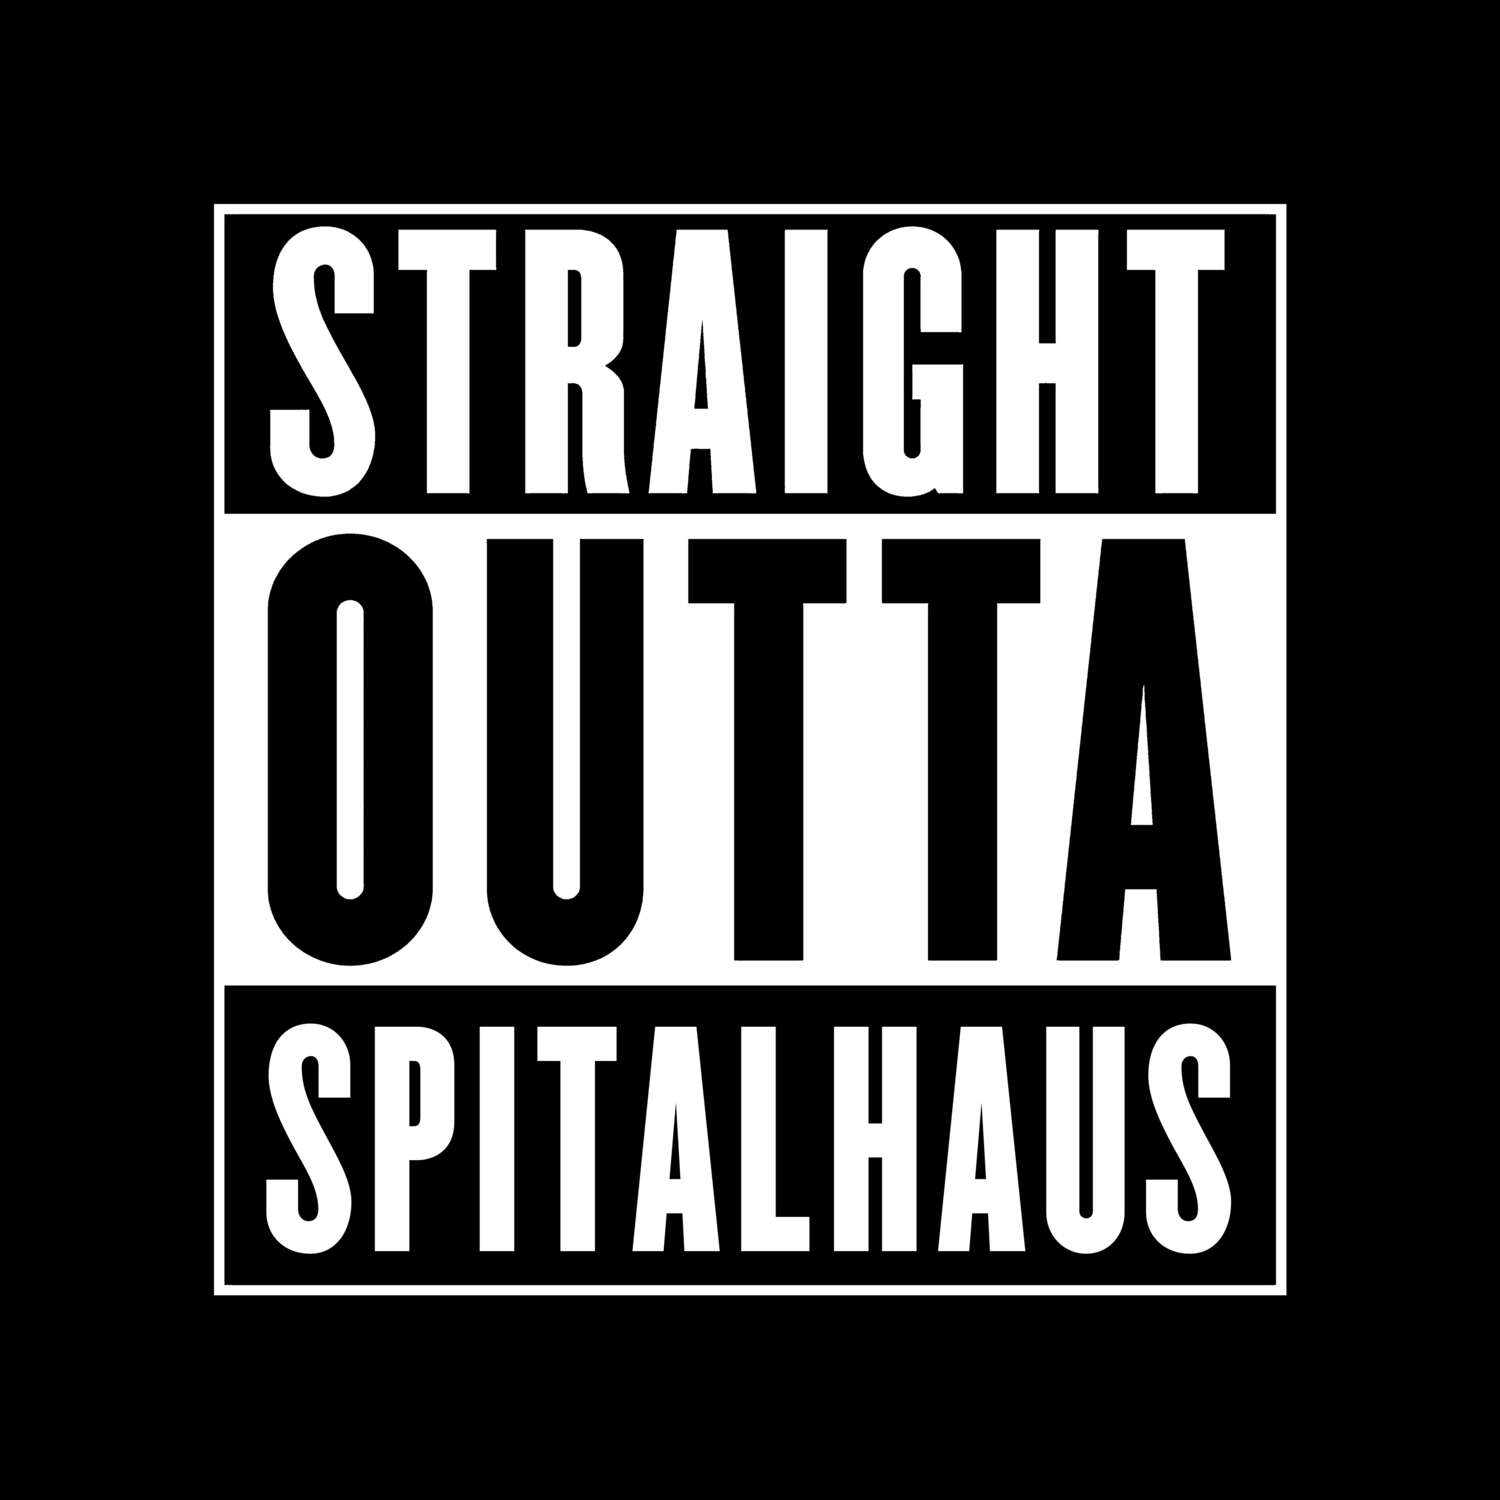 Spitalhaus T-Shirt »Straight Outta«